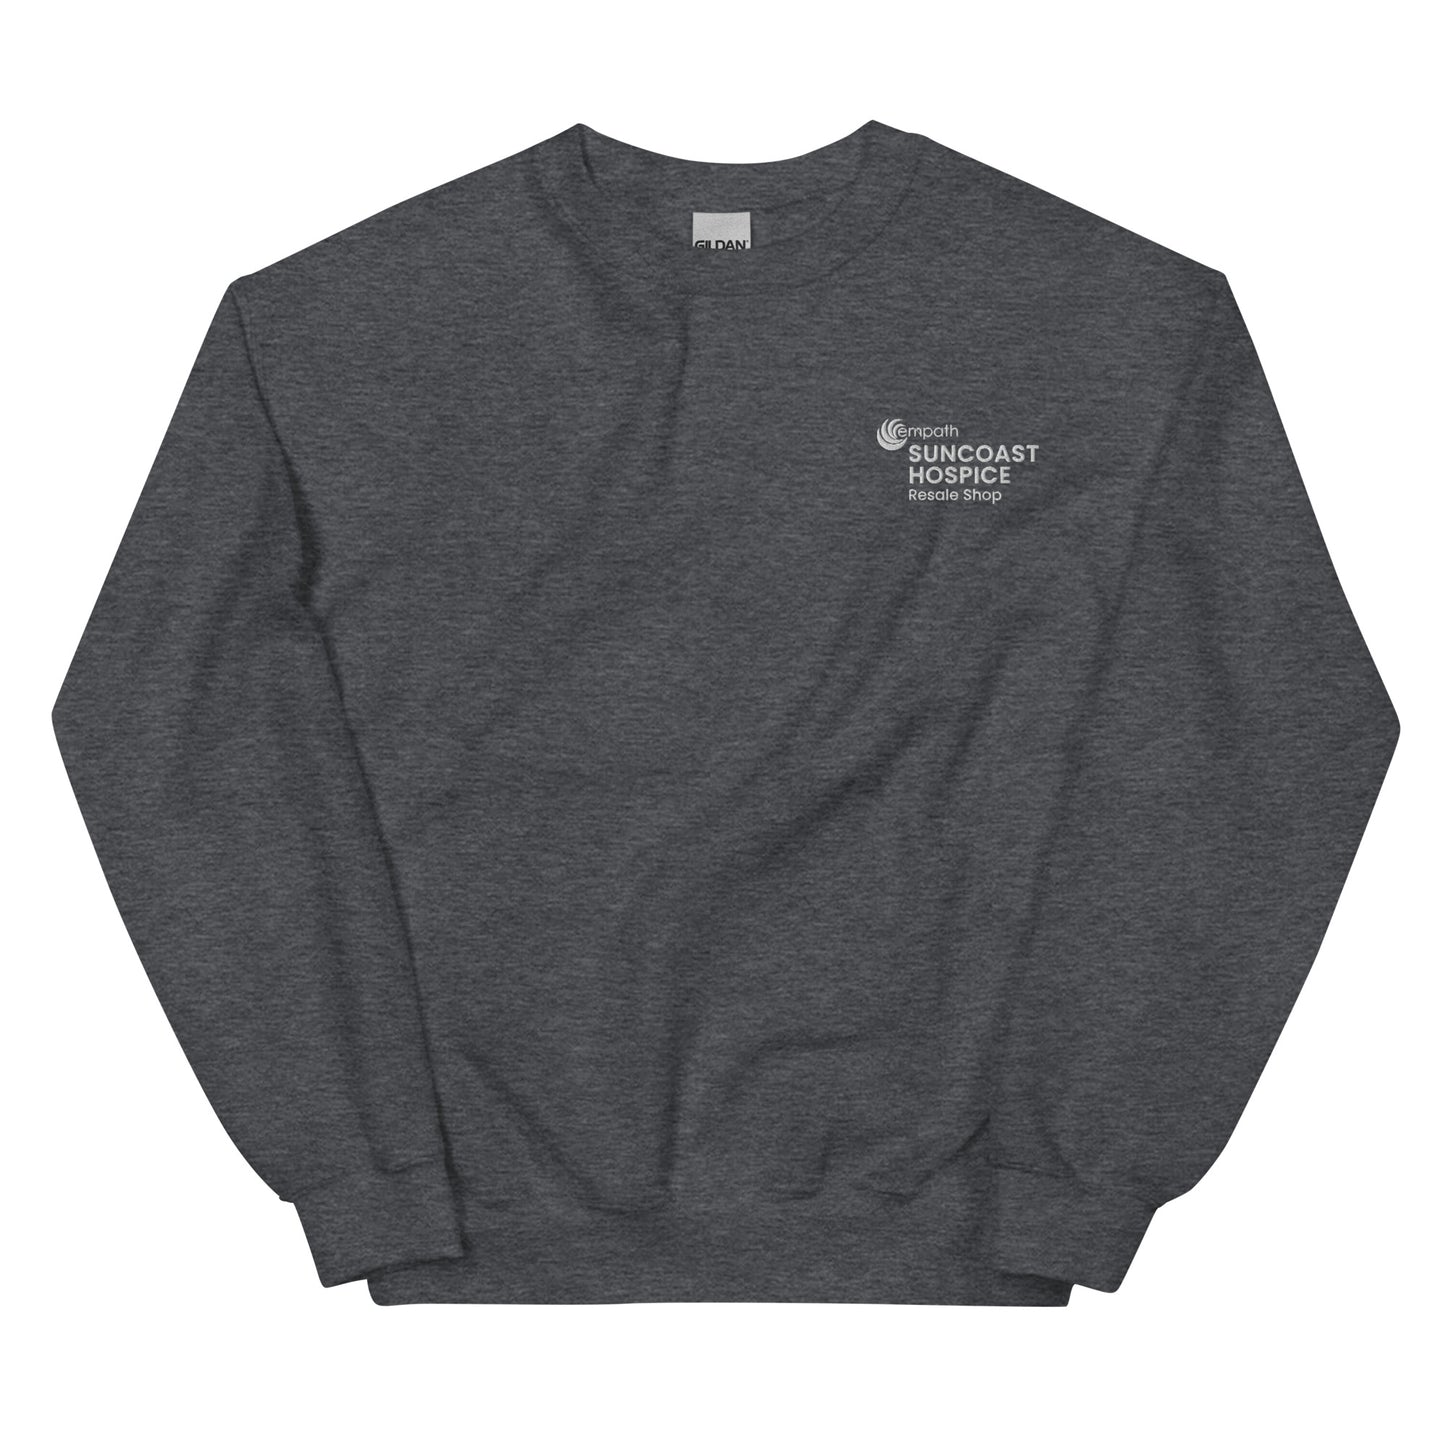 Unisex Classic Sweatshirt - Suncoast Hospice Resale Shop